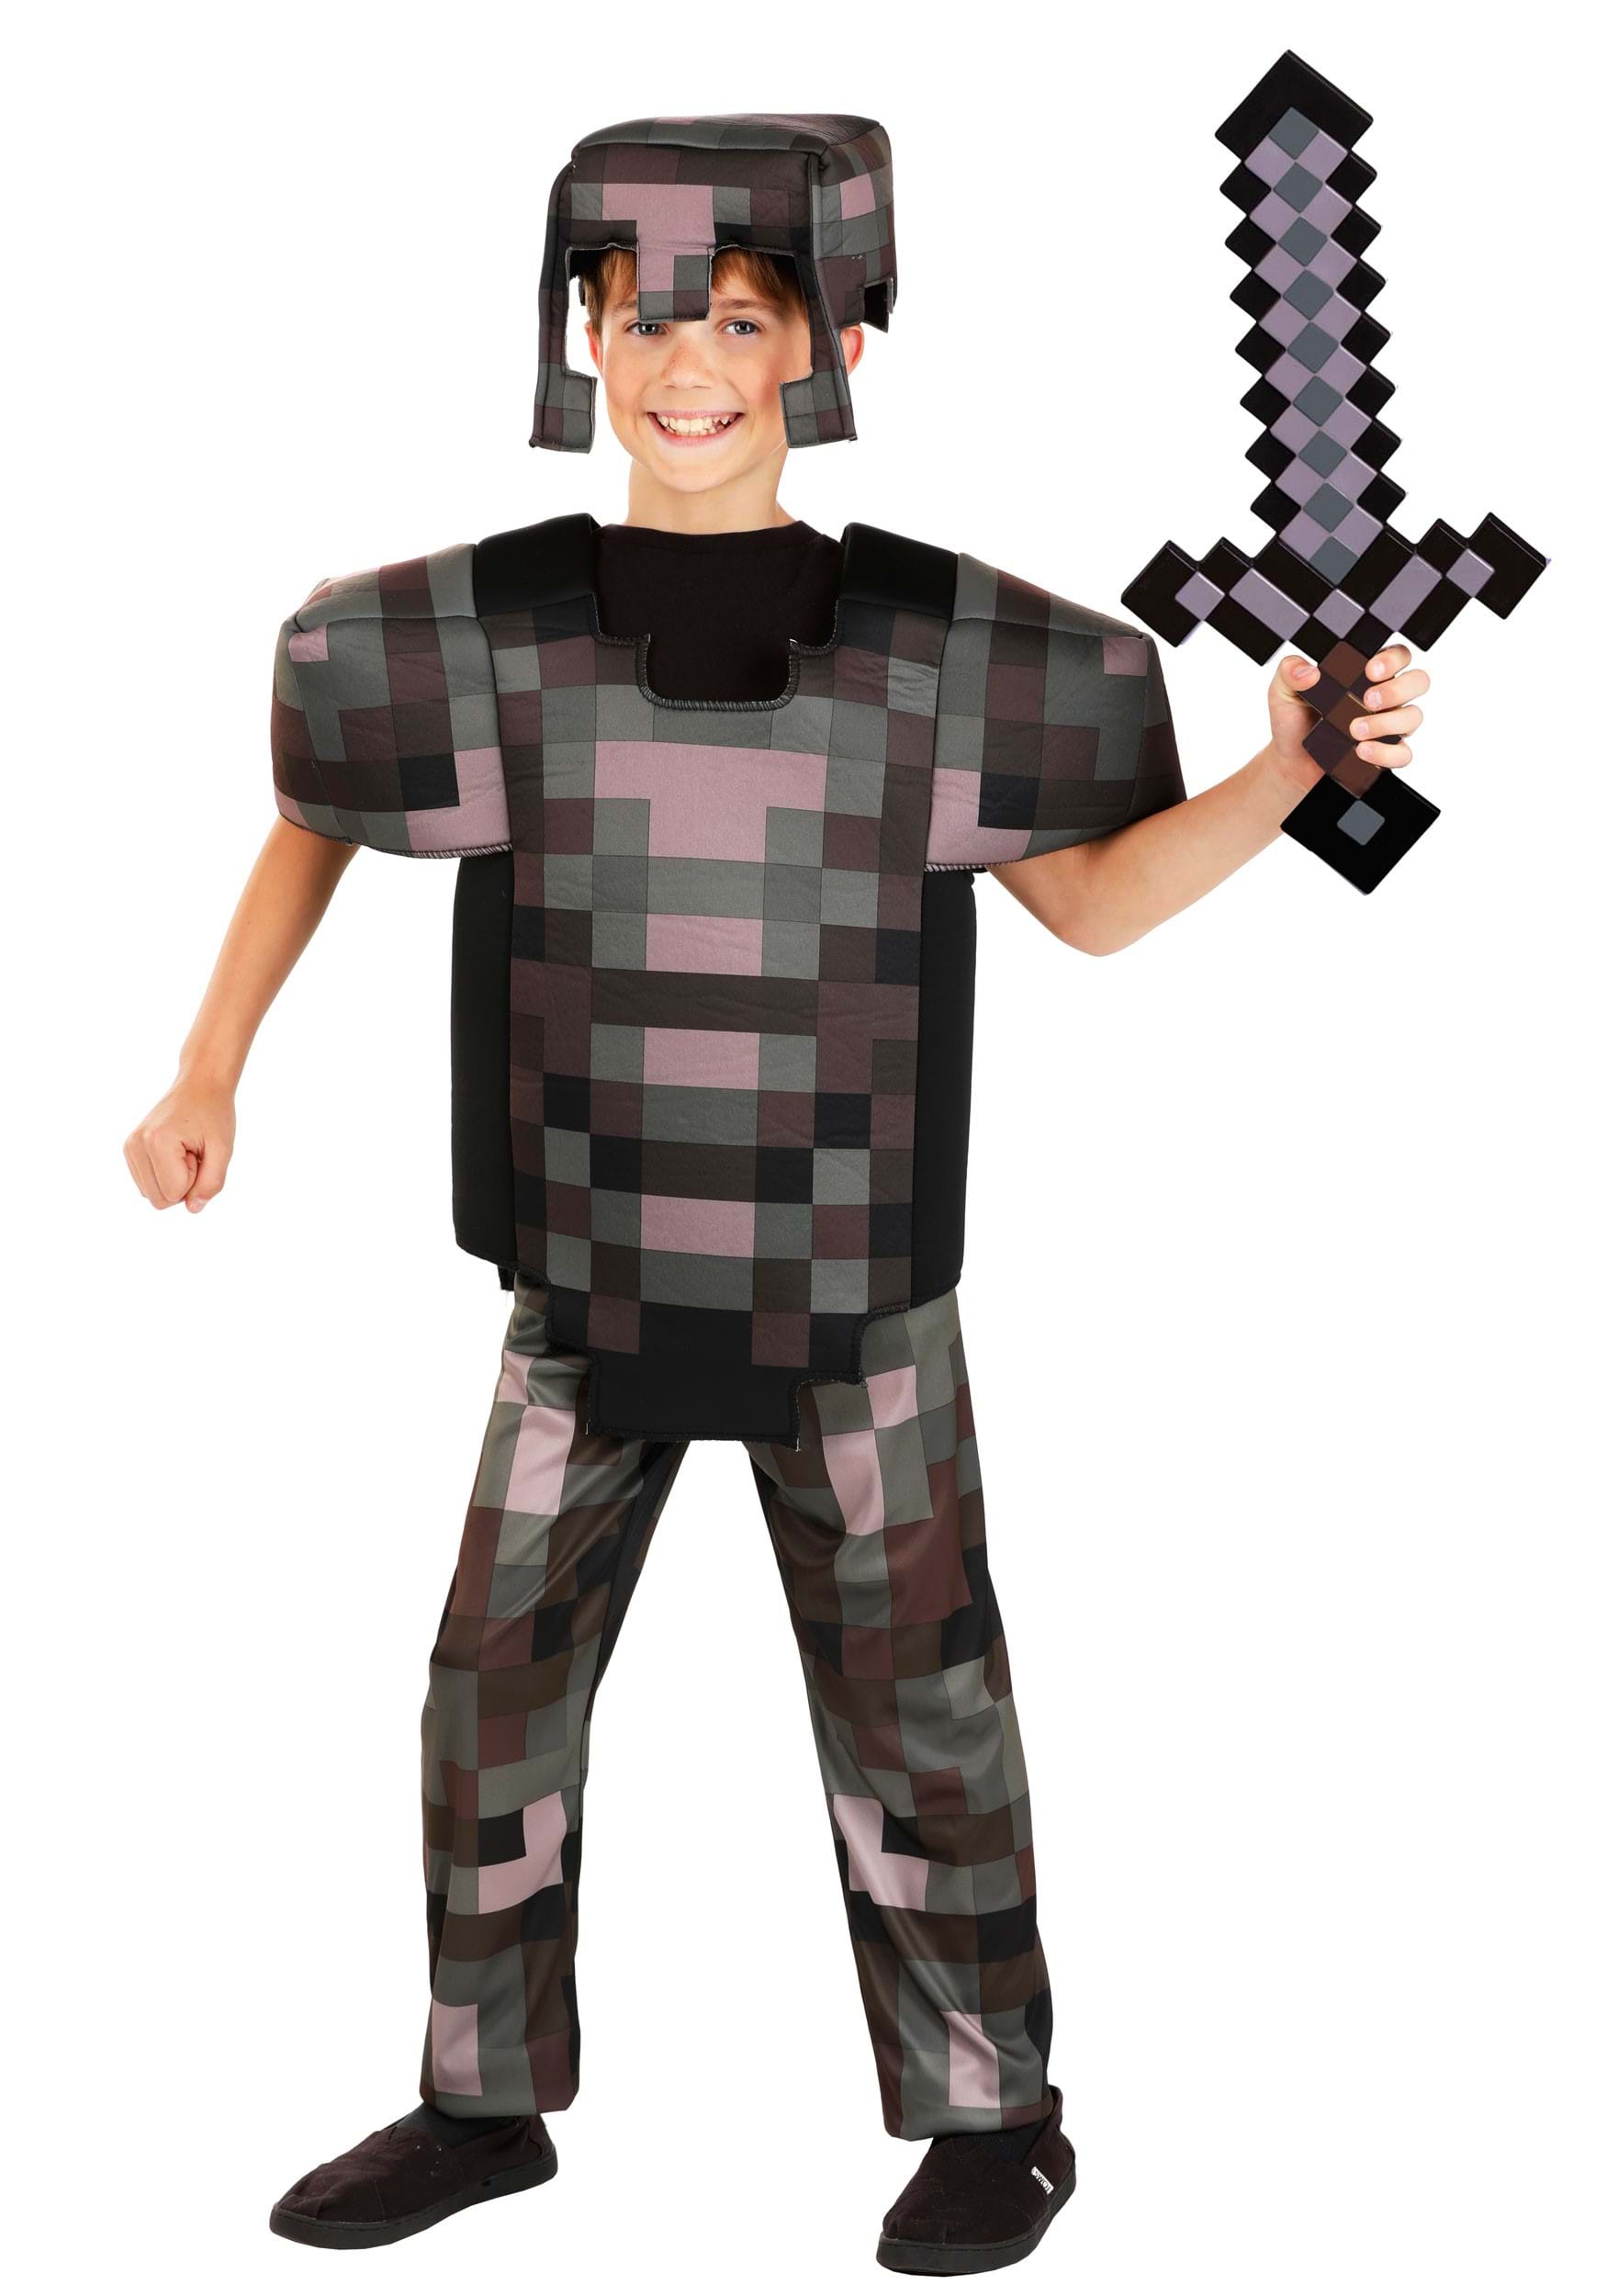 Minecraft Kid's Enchanted Armor Deluxe Costume